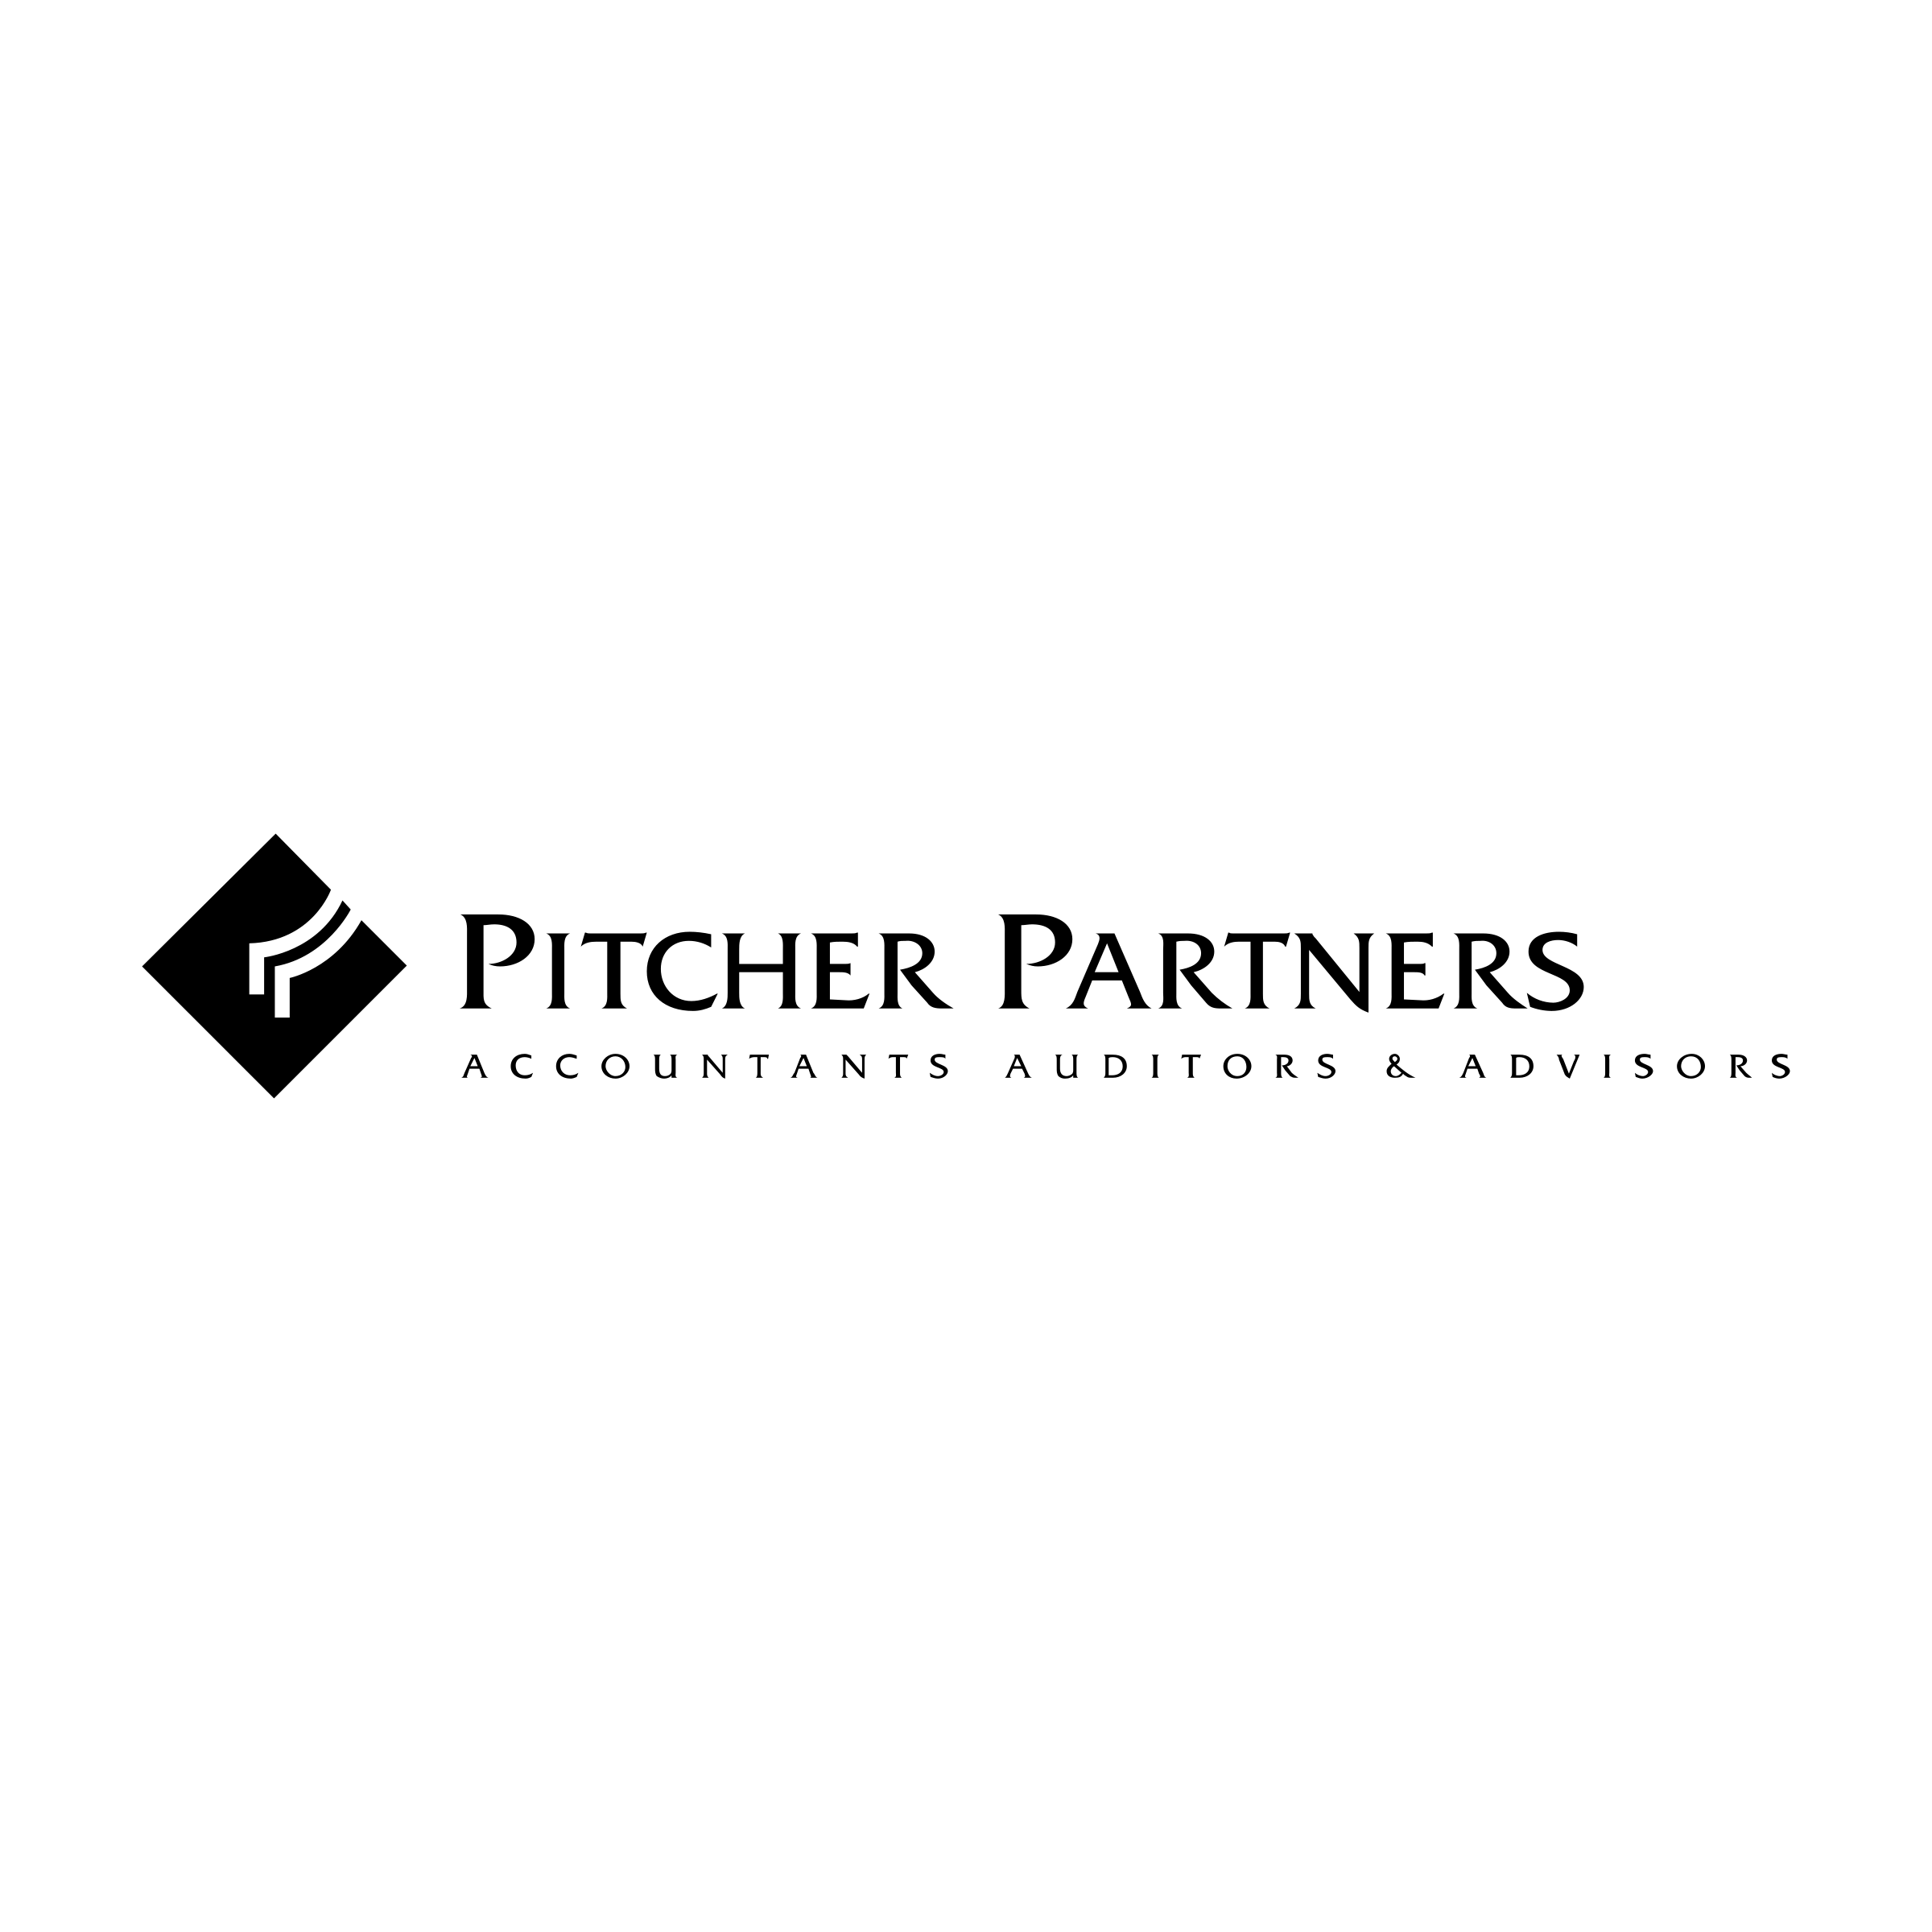 Pitcher Logo - Pitcher Partners Logo PNG Transparent & SVG Vector - Freebie Supply